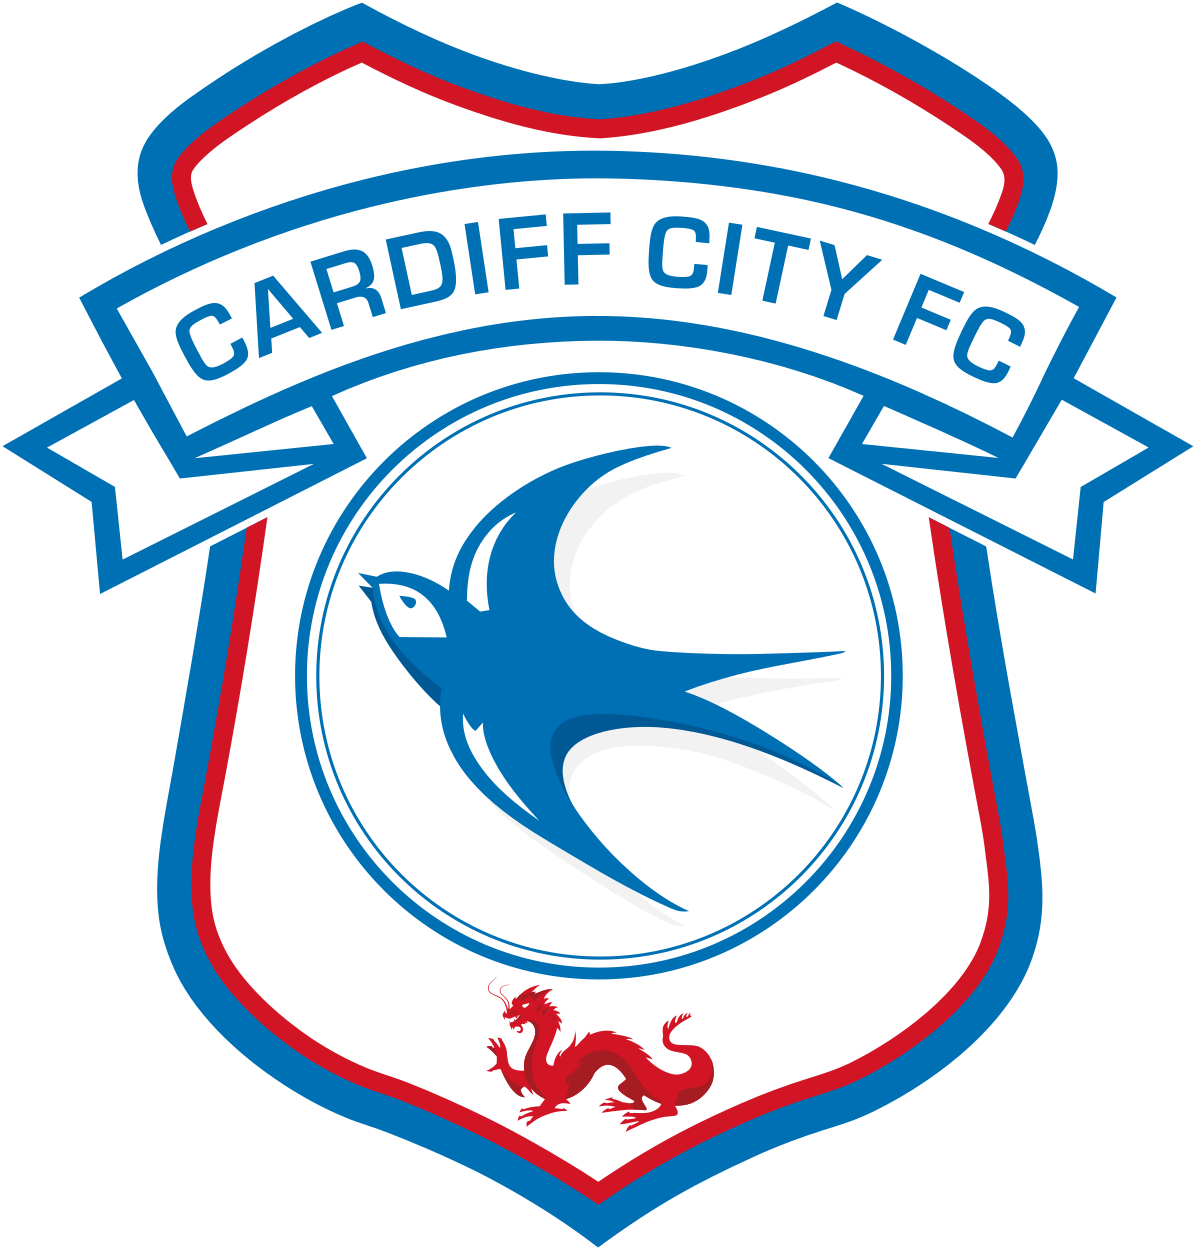 Cidade Cardiff F C logotipo PNG imagem fundo